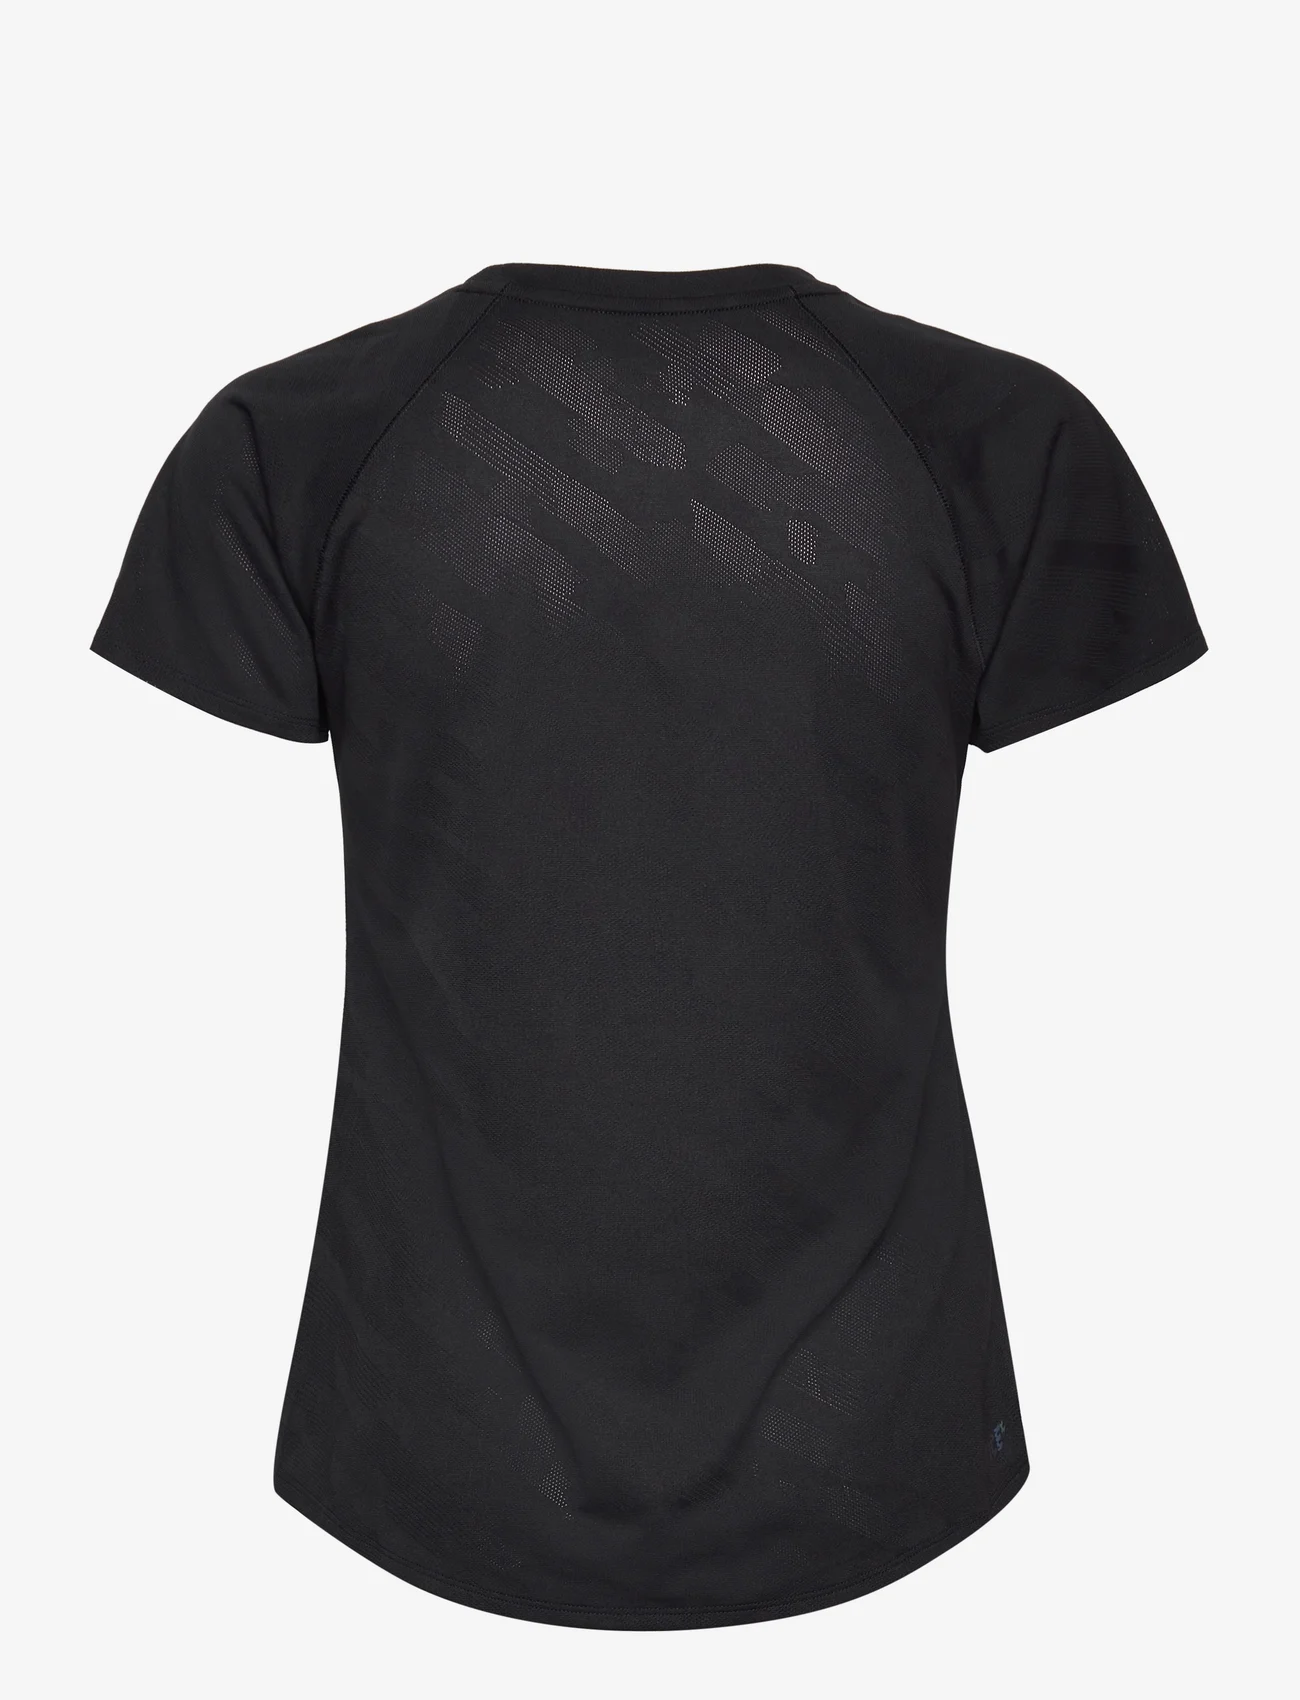 New Balance - Q Speed Jacquard Short Sleeve - t-shirts & tops - black - 1